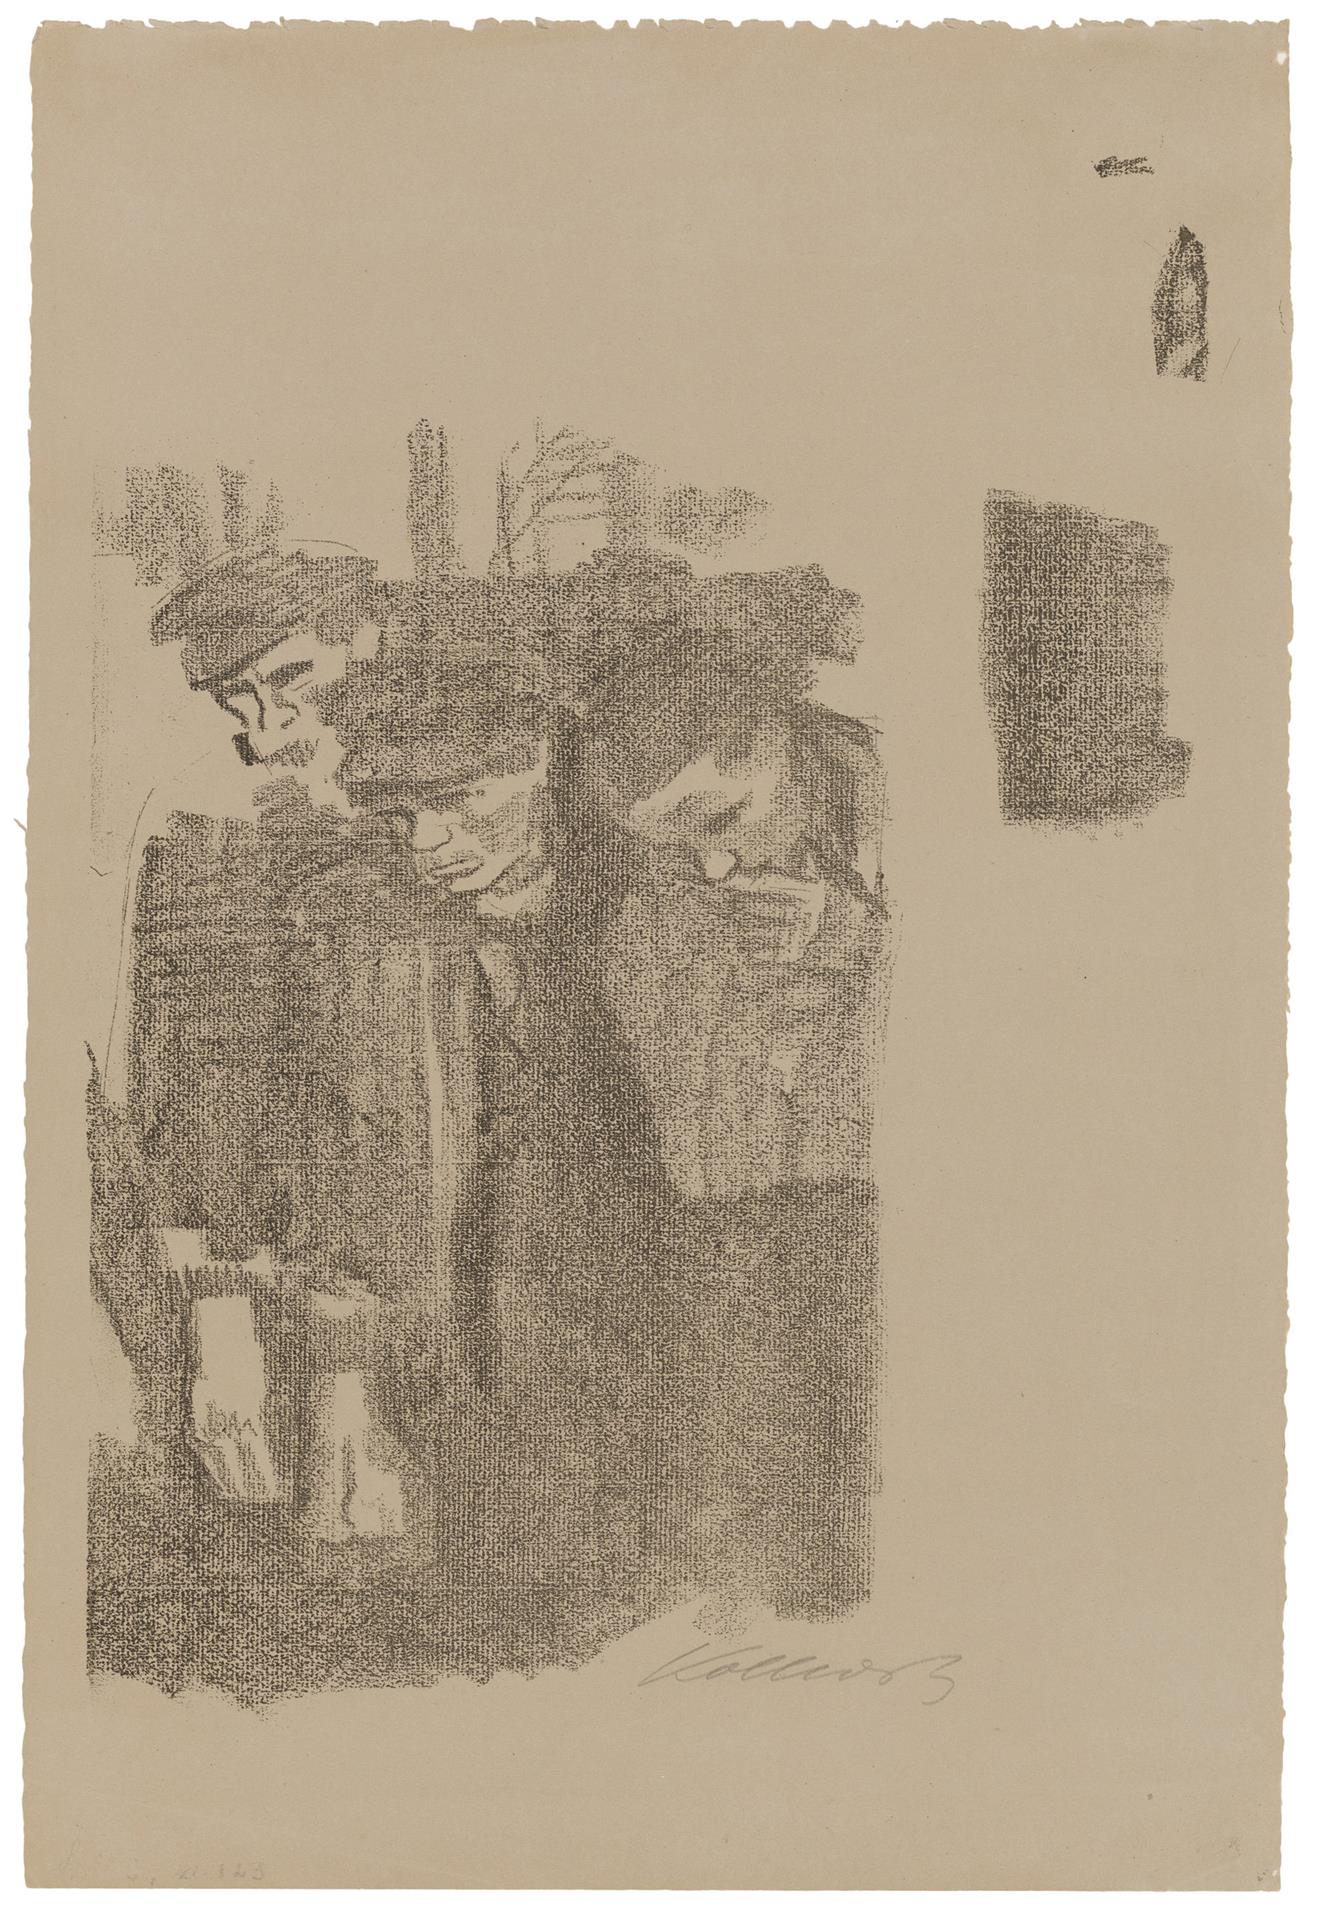 Käthe Kollwitz, March Cemetery, first version, 1913, crayon lithograph (transfer of a drawing on ribbed laid paper), Kn 127, Cologne Kollwitz Collection © Käthe Kollwitz Museum Köln